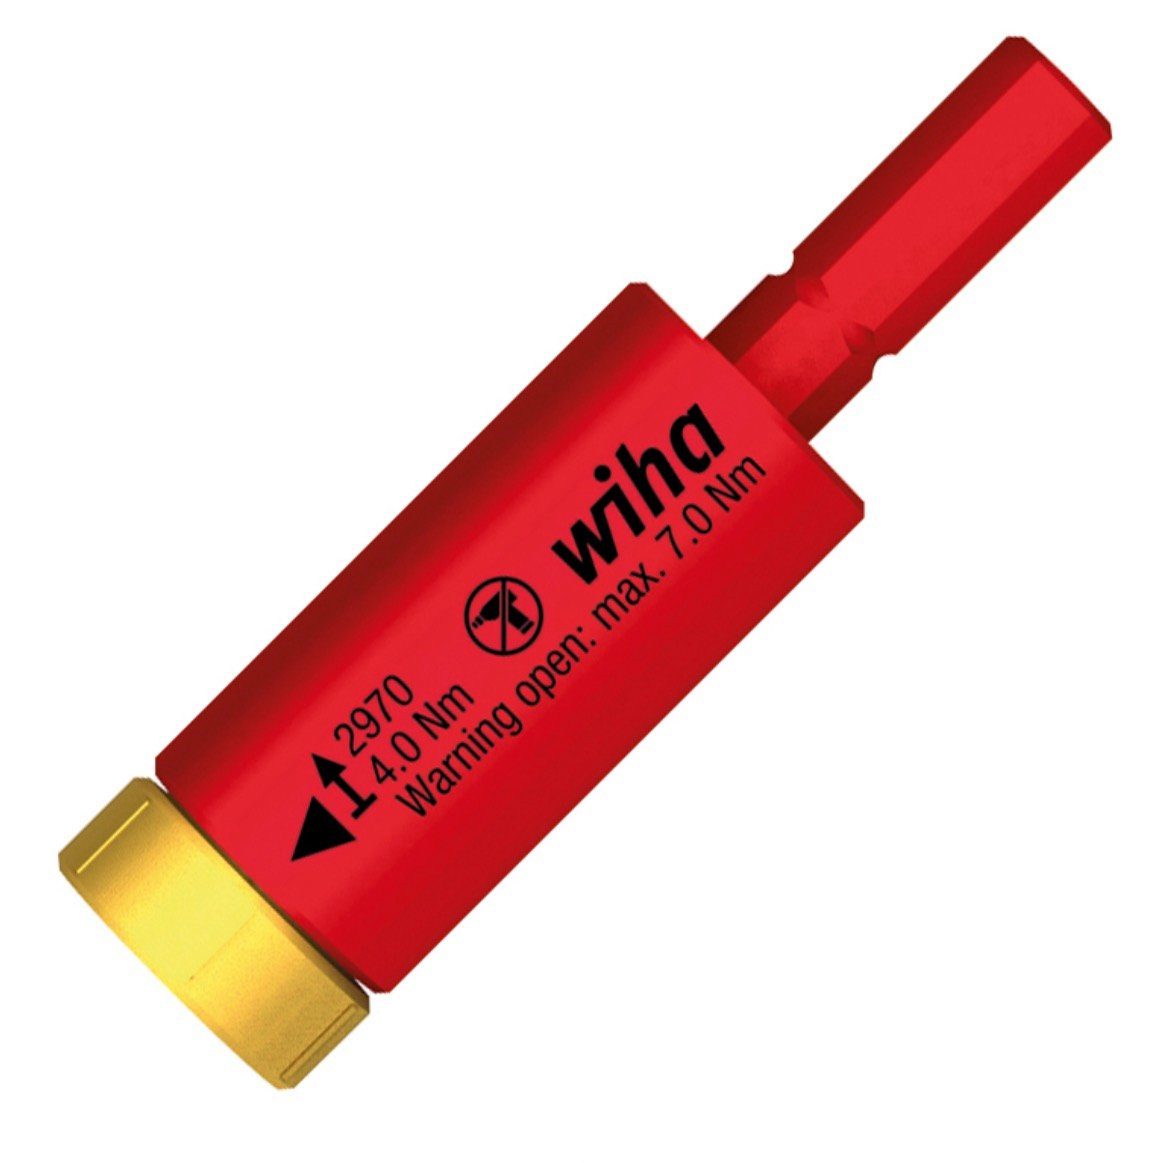 Wiha Torque Drehmoment Adapter für 4,0 Nm slimBits (41345) Easy Wiha Schraubendreher